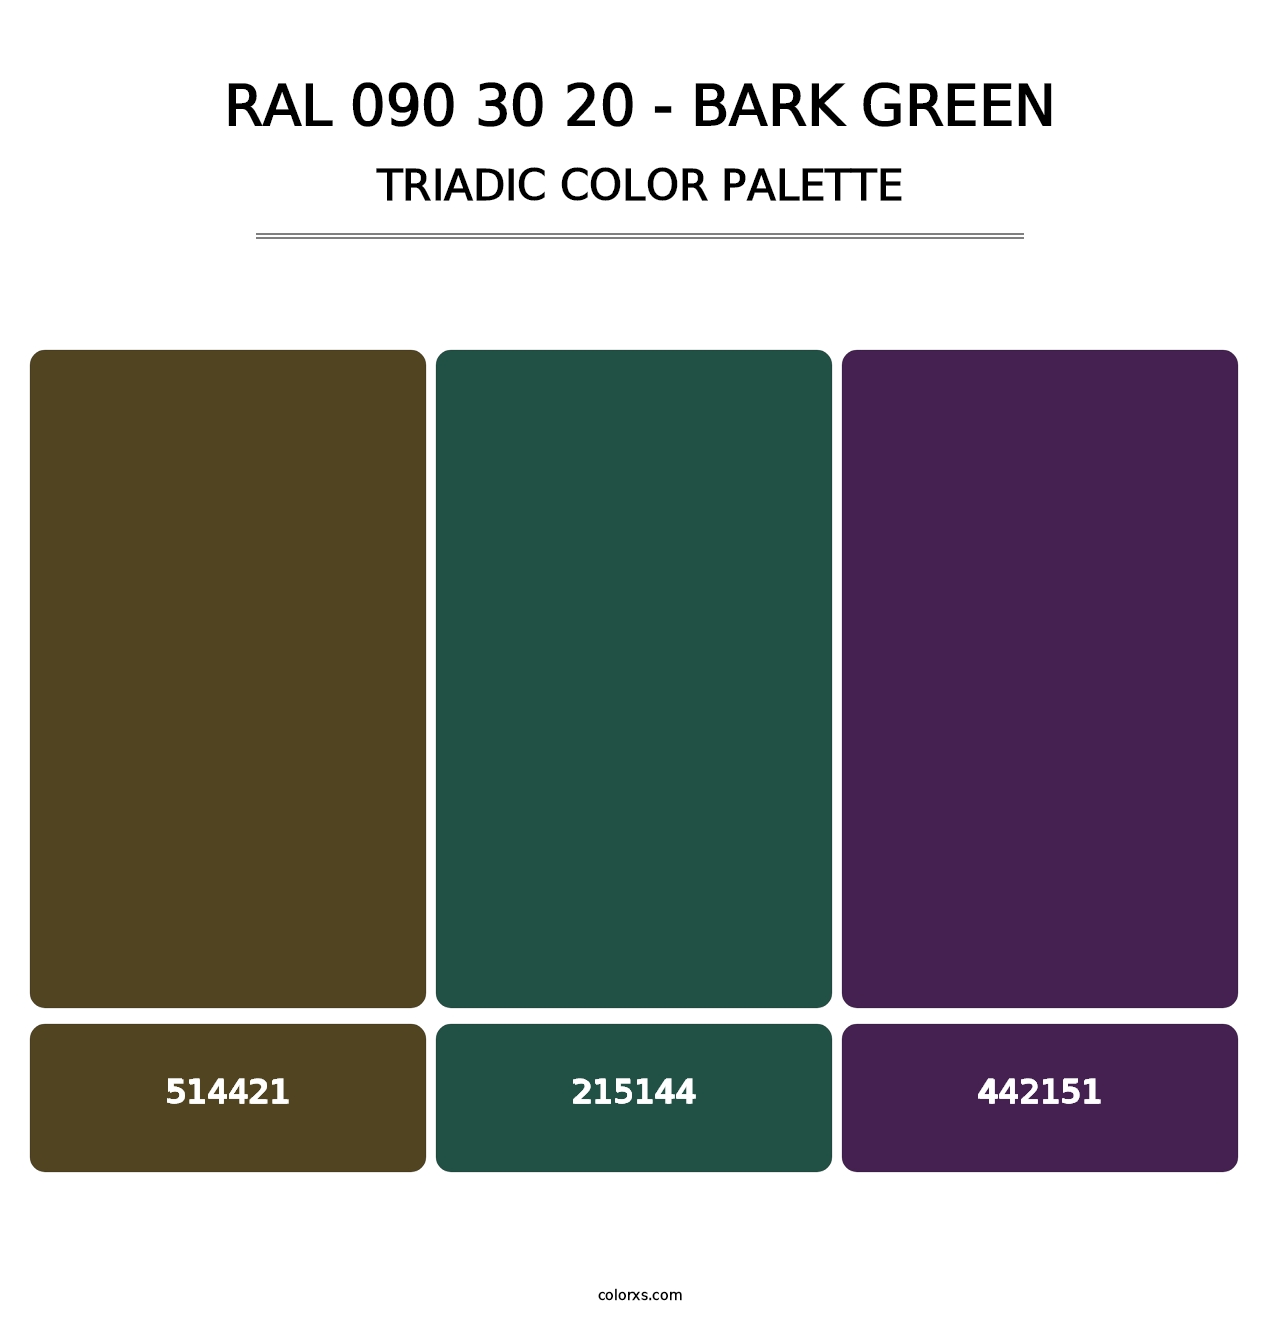 RAL 090 30 20 - Bark Green - Triadic Color Palette